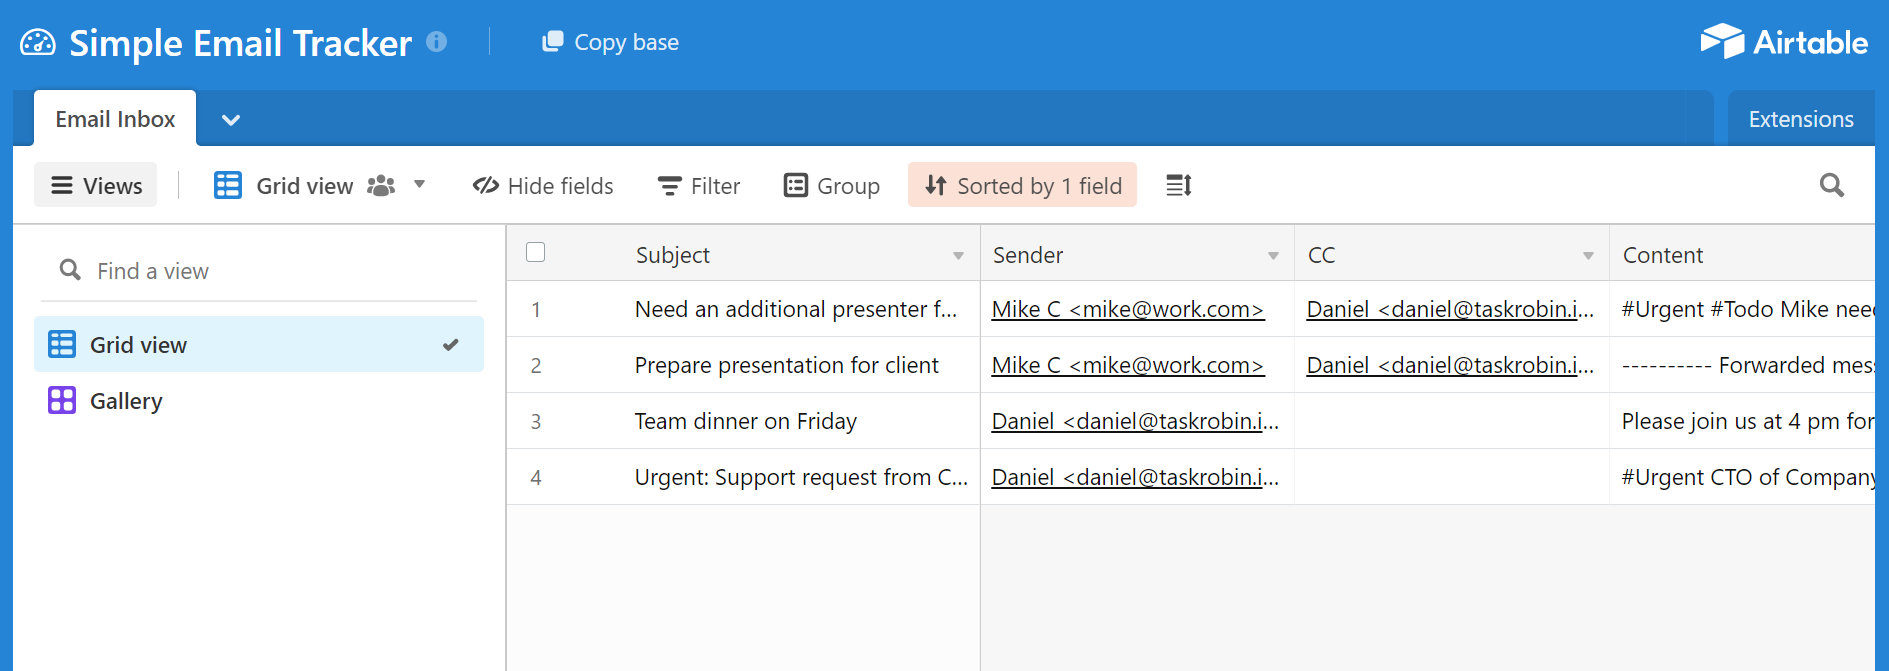 Airtable template for saving emails via TaskRobin